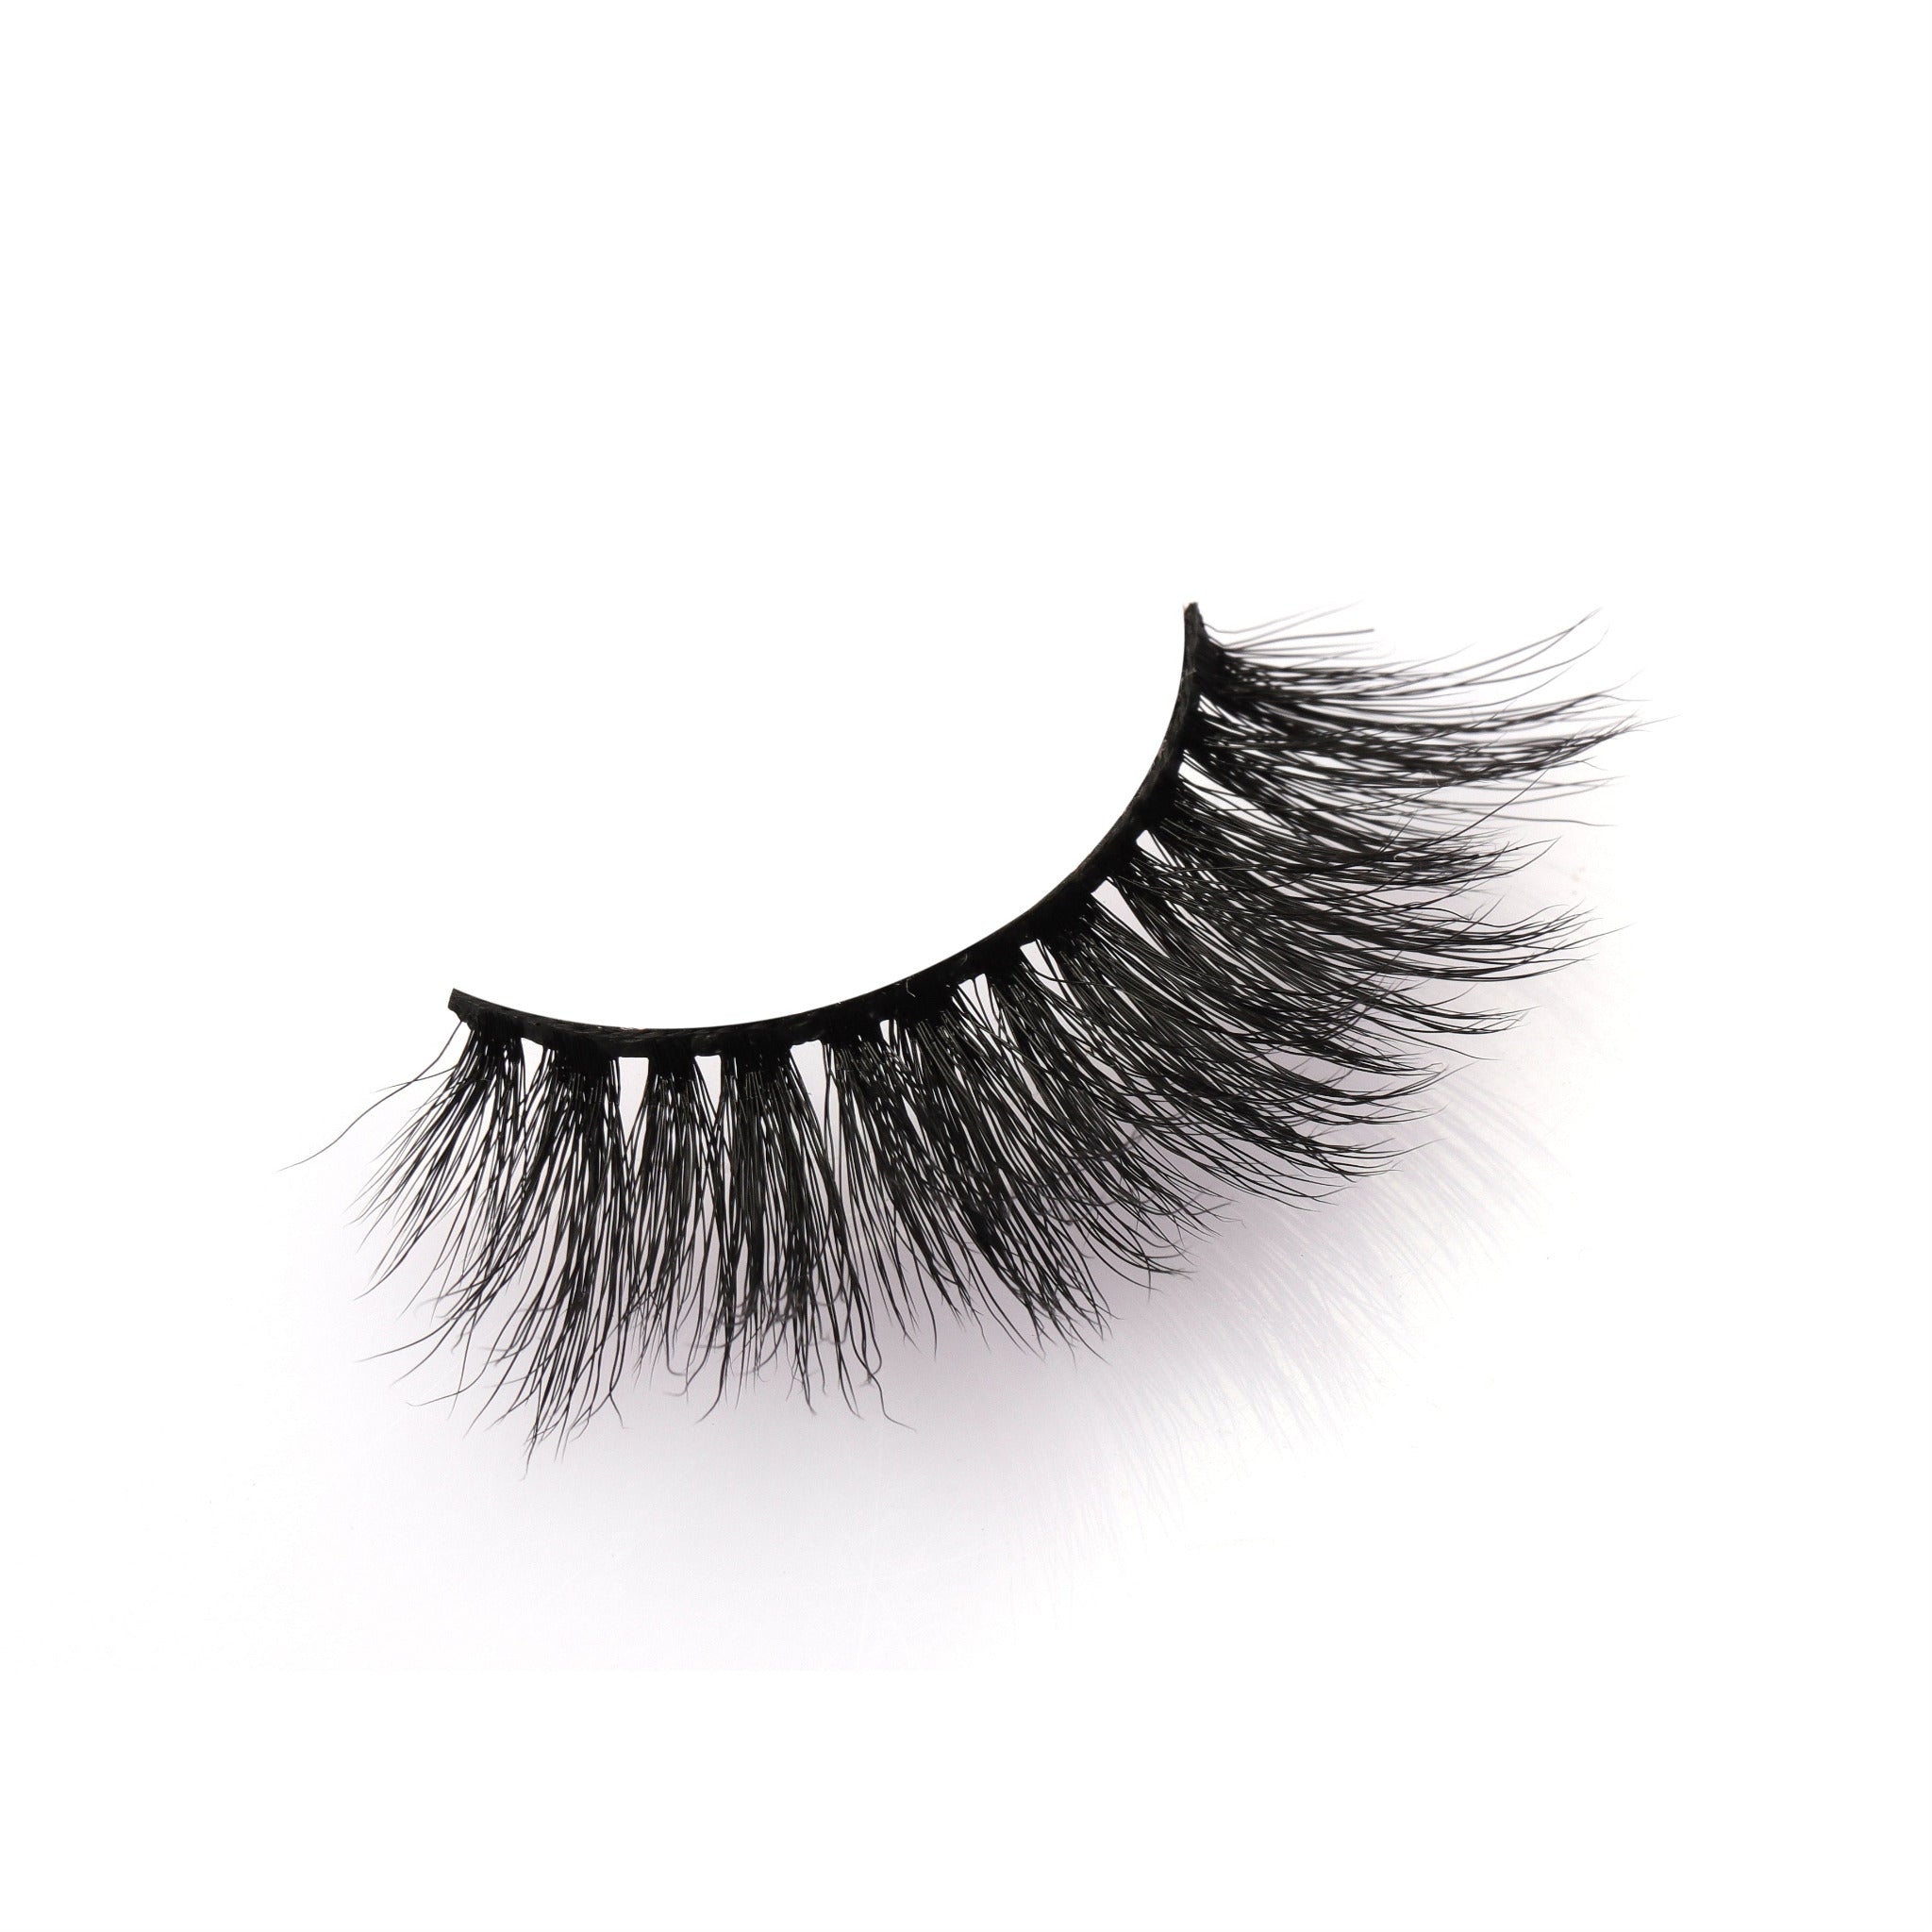 strip lashes, false eyelashes, natural strip lash look, high quality strip lashes, volume style strip lashes, luxurious strip lashes